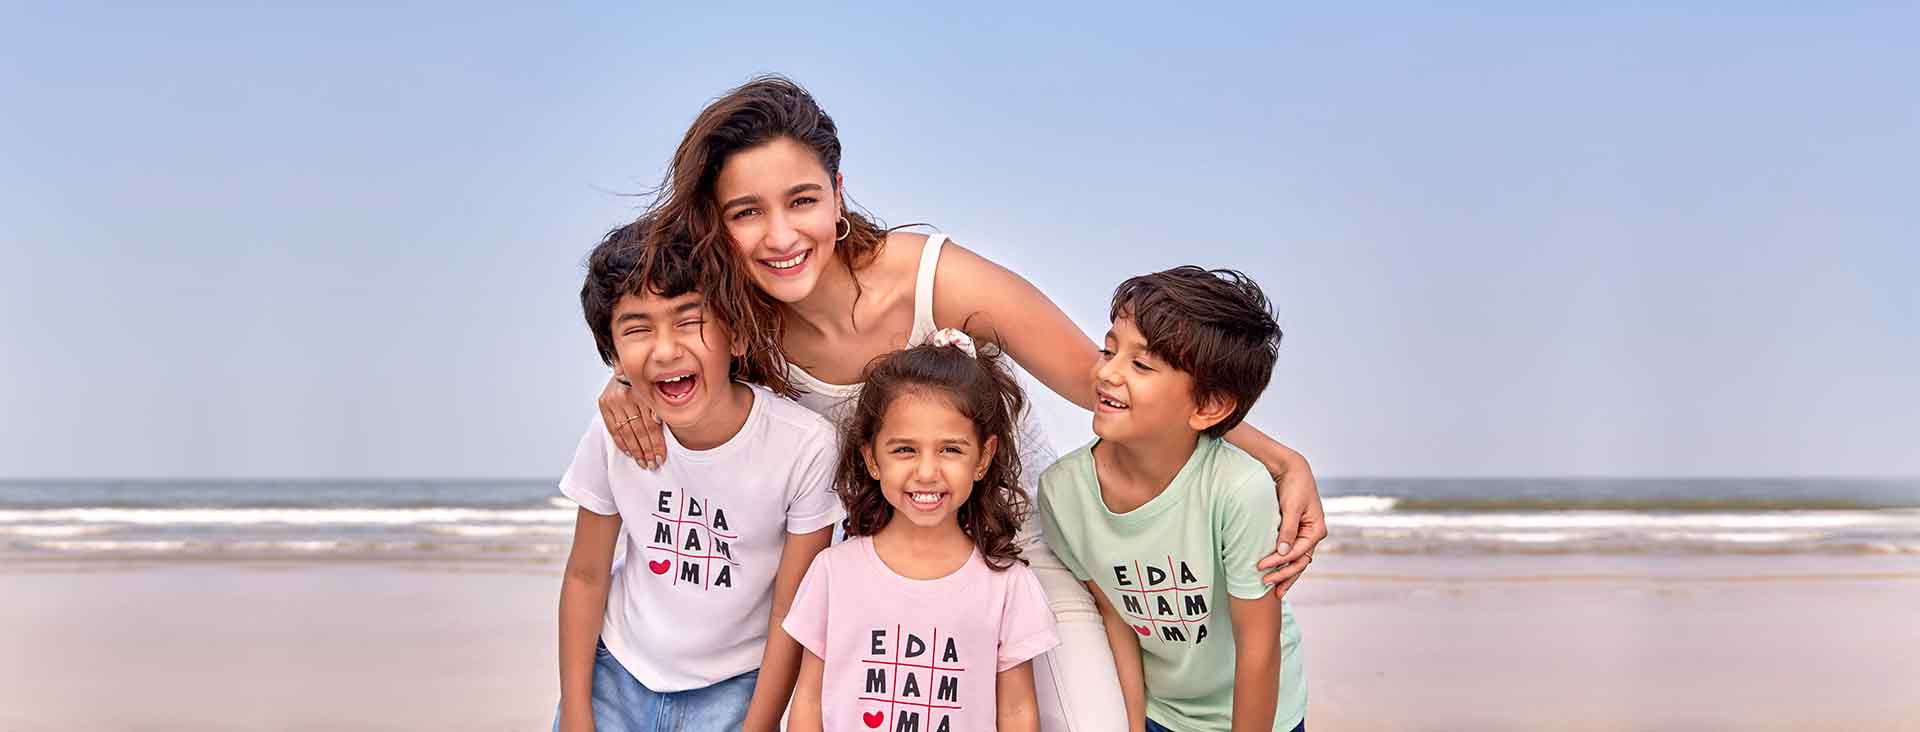 Alia Bhatt promoting her clothing brand Ed-a-Mamma